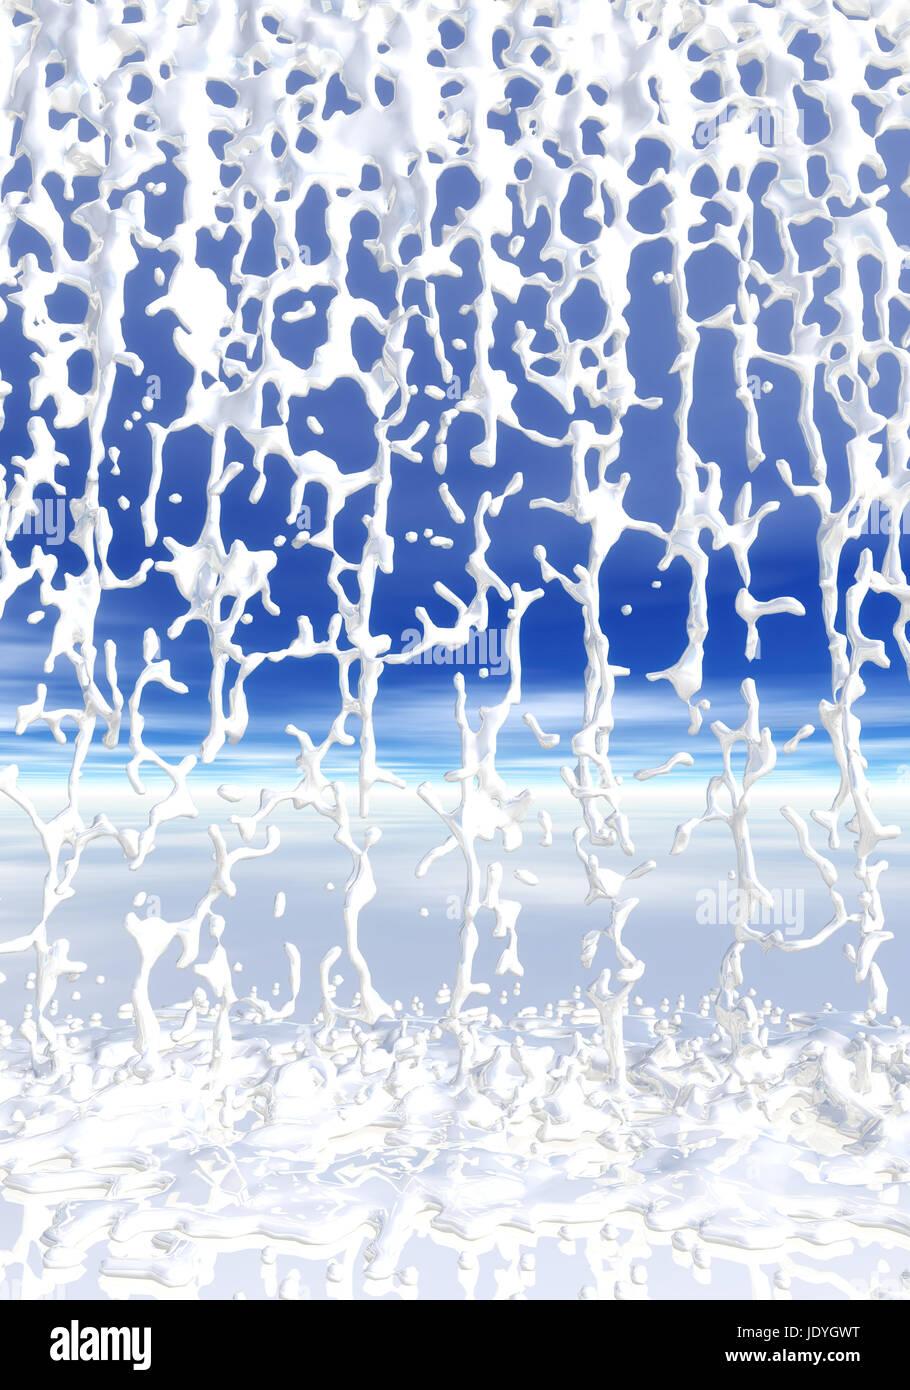 3D Illustration of splashing Fluid Stock Photo